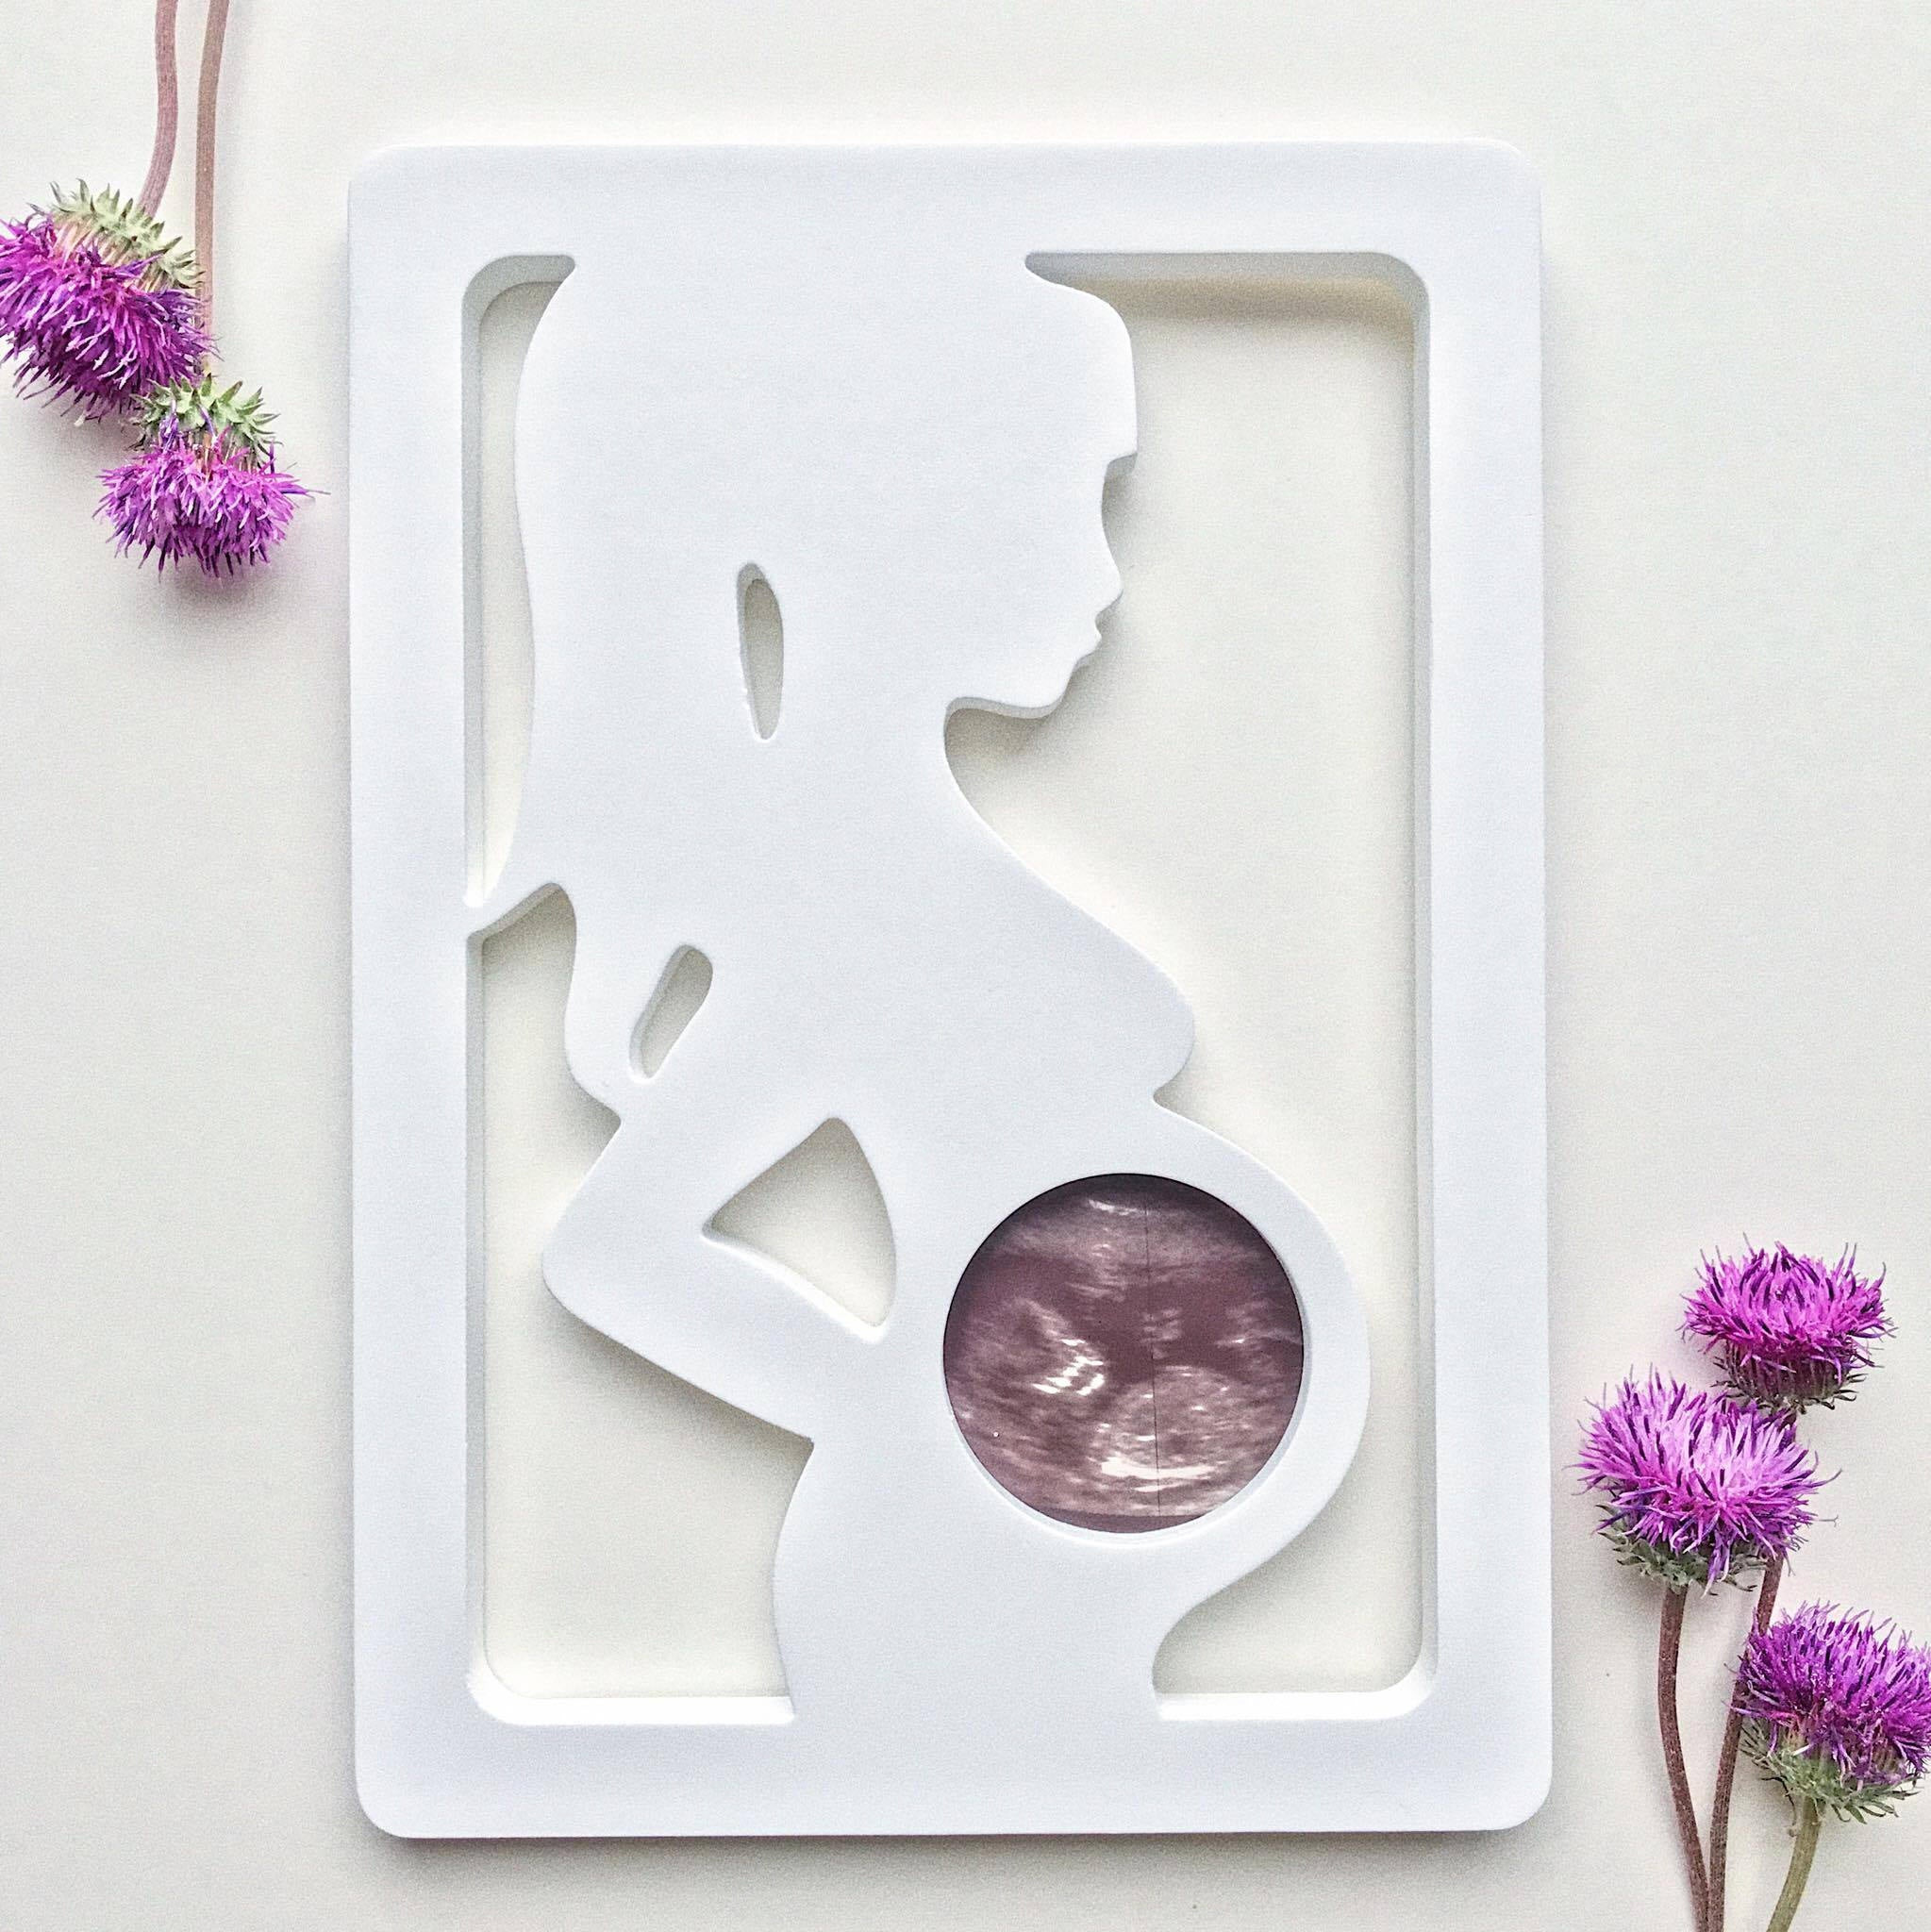 Baby Gifts For Mom
 Ultrasound frame New Baby Frame New mom t Gender Reveal